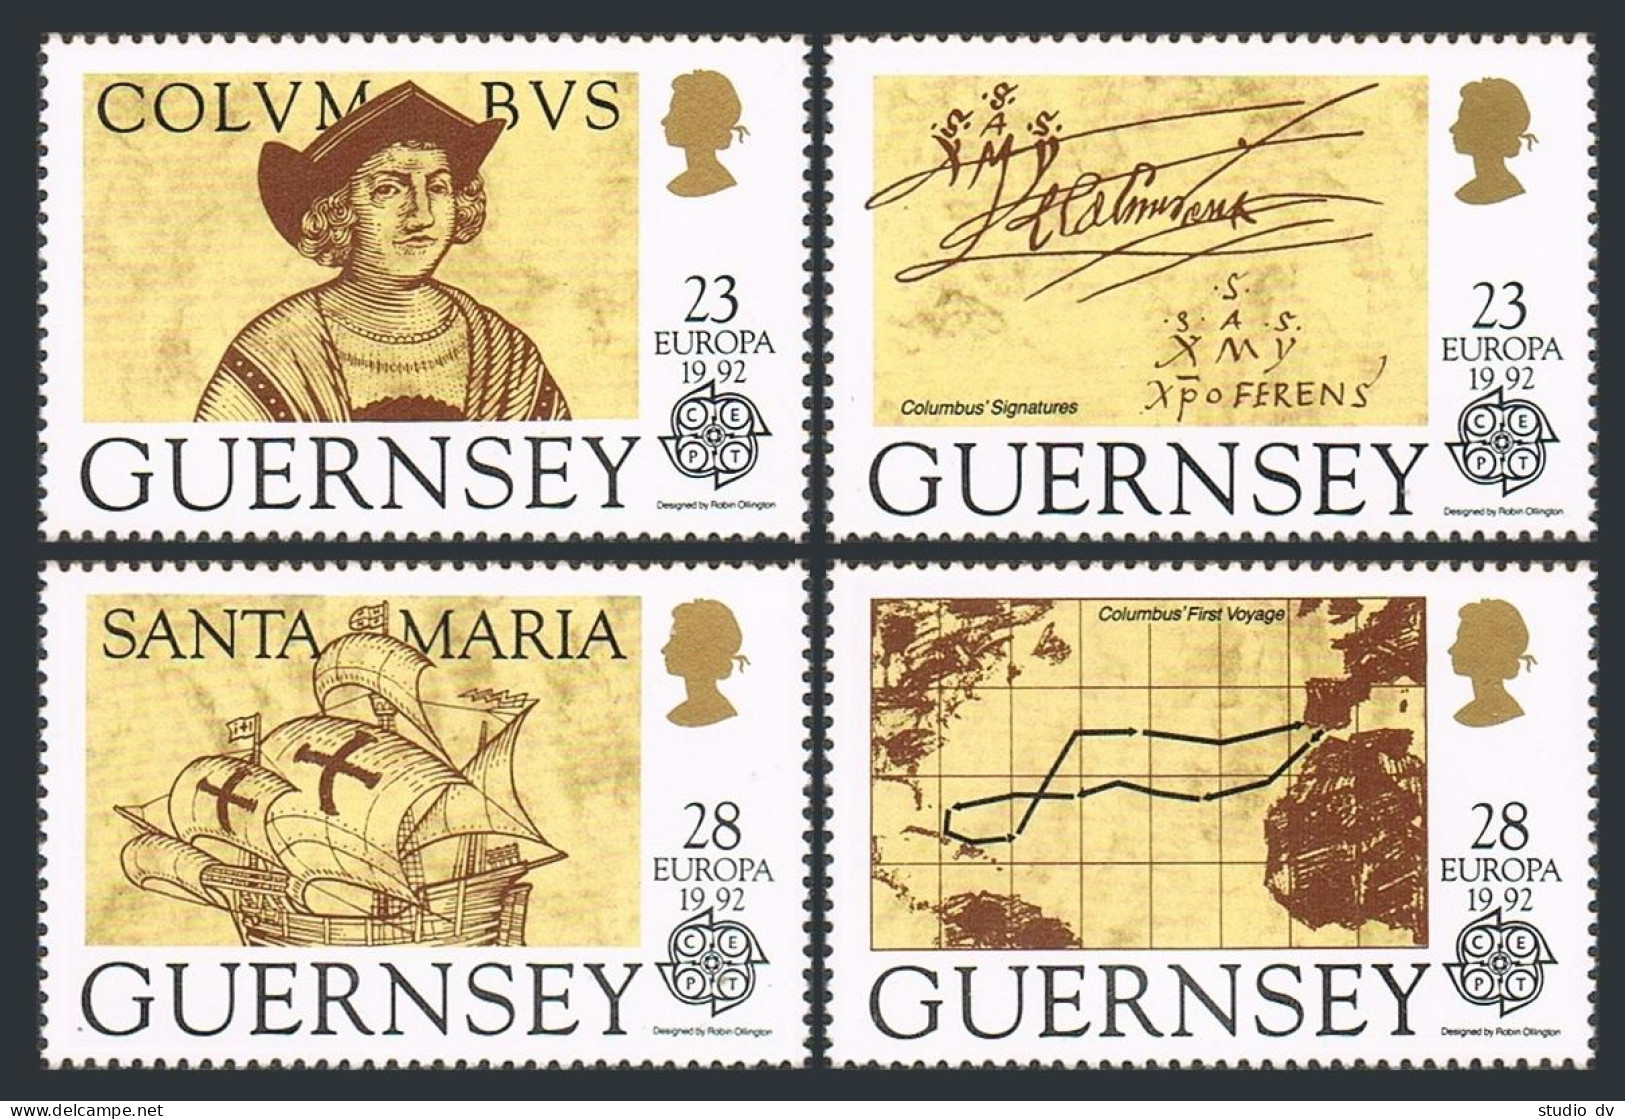 Guernsey 467-470, MNH. Mi 549-552. EUROPE CEPT-1992. Columbus-500. Ships, Map. - Guernesey